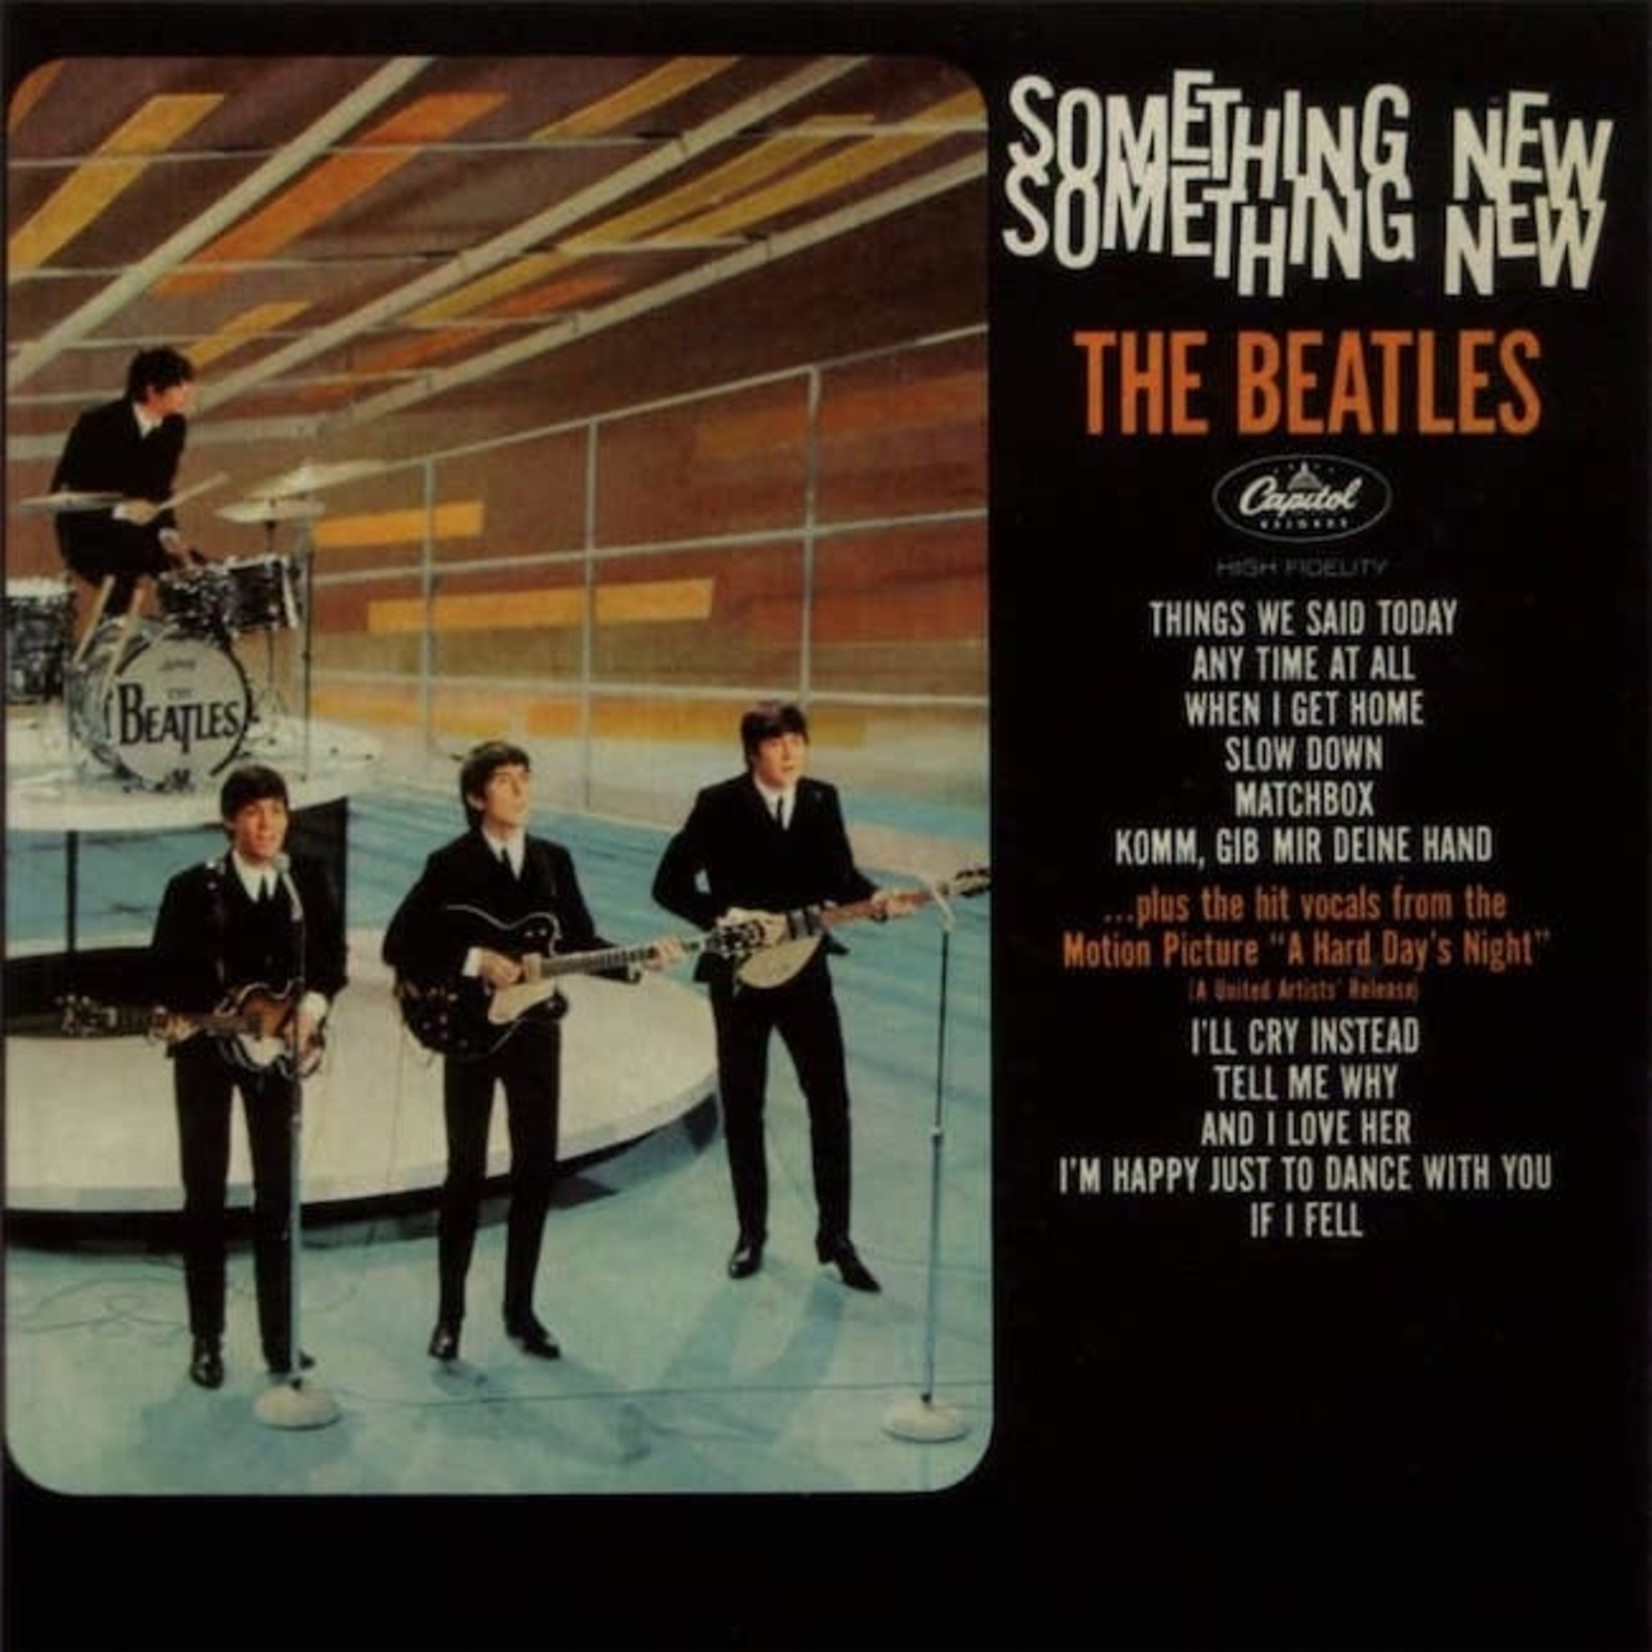 [Vintage] Beatles - Something New Something New (stereo reissue)